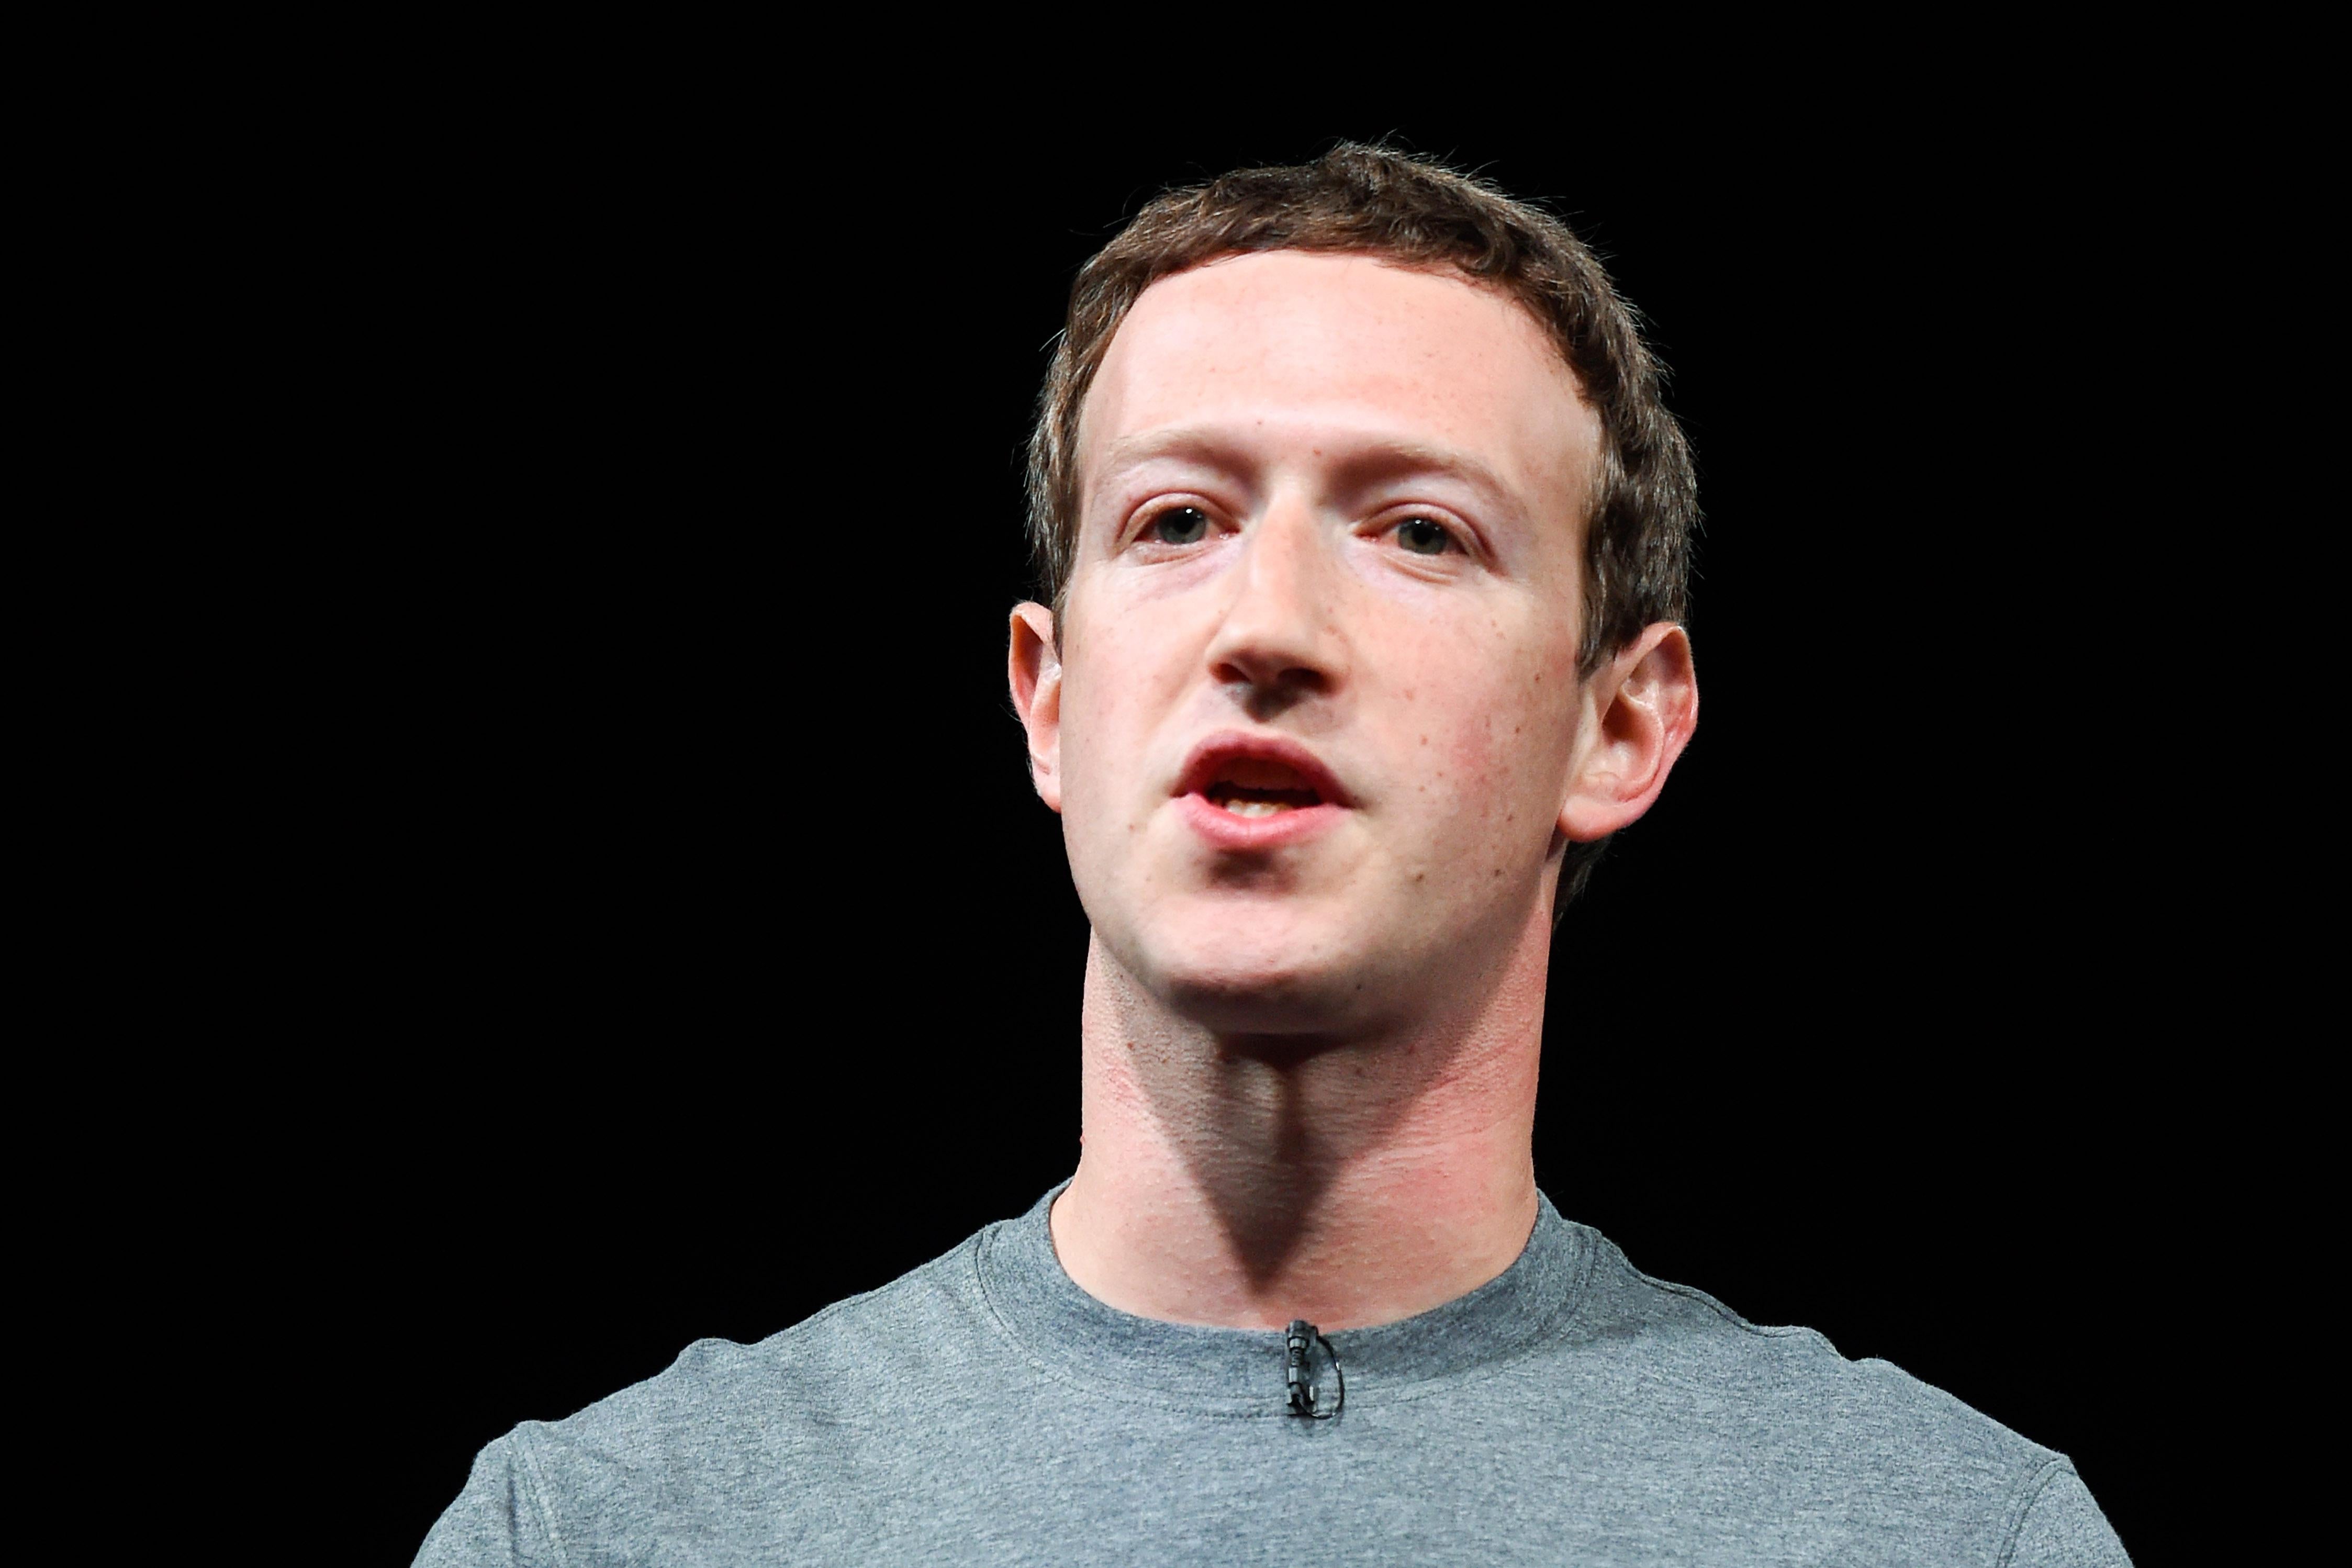 Facebook CEO Mark Zuckerberg says the company "made mistakes."